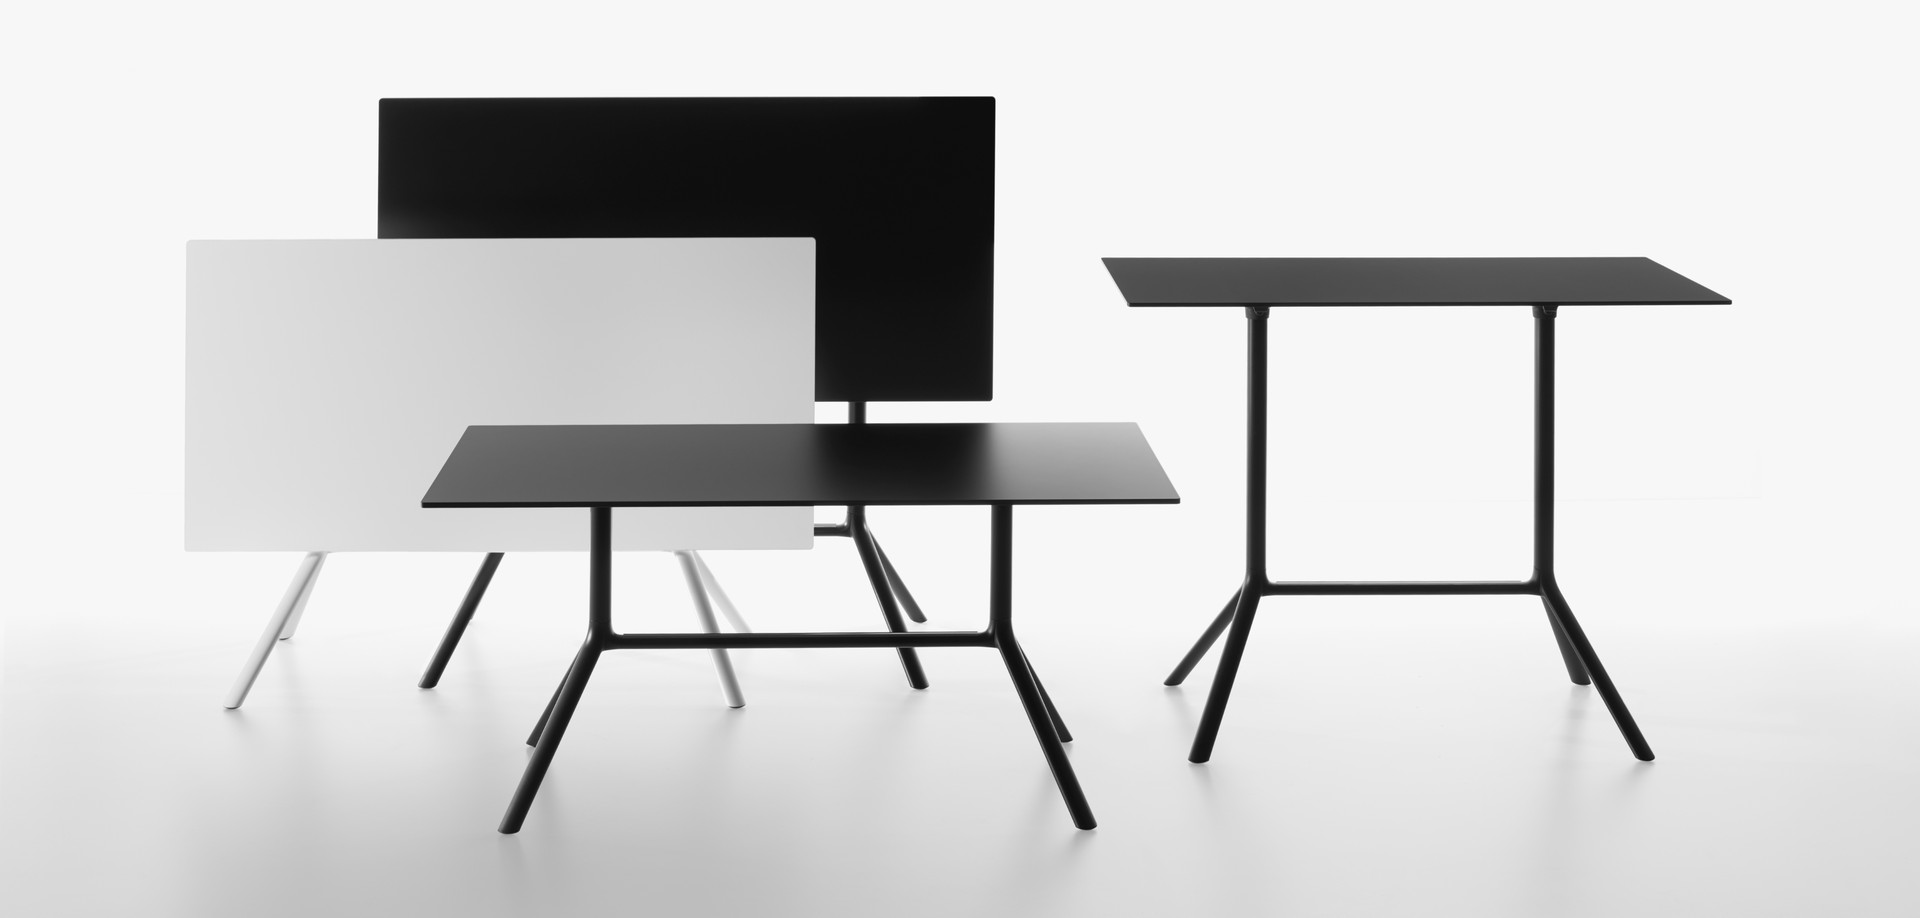 Plank - MIURA table rectangular folded and unfolded, black, white - group